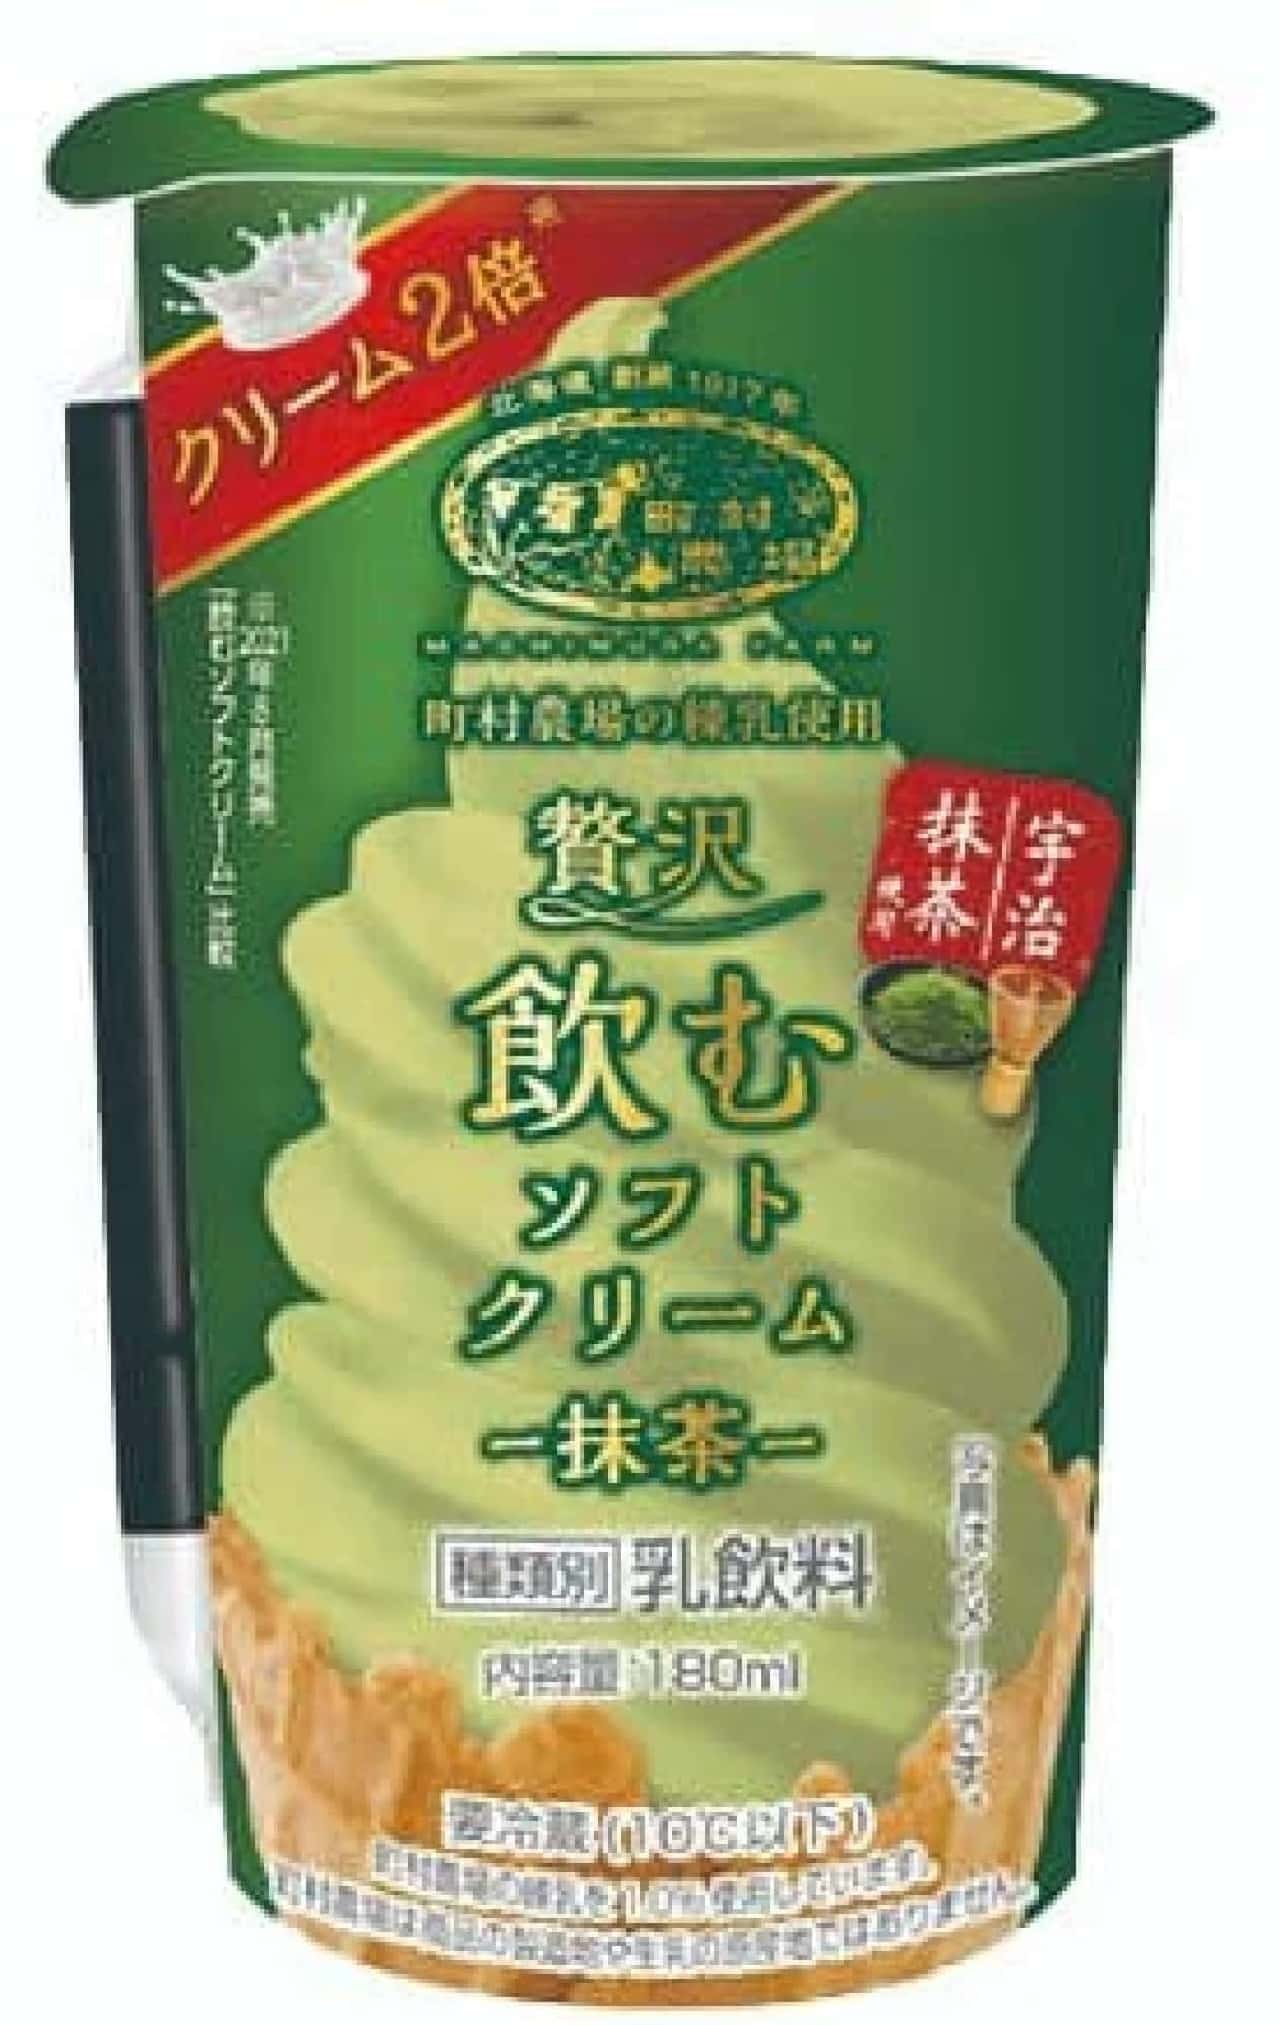 LAWSON "Machimura Farm Luxury Drink Soft Serve Ice Cream Matcha 180ml